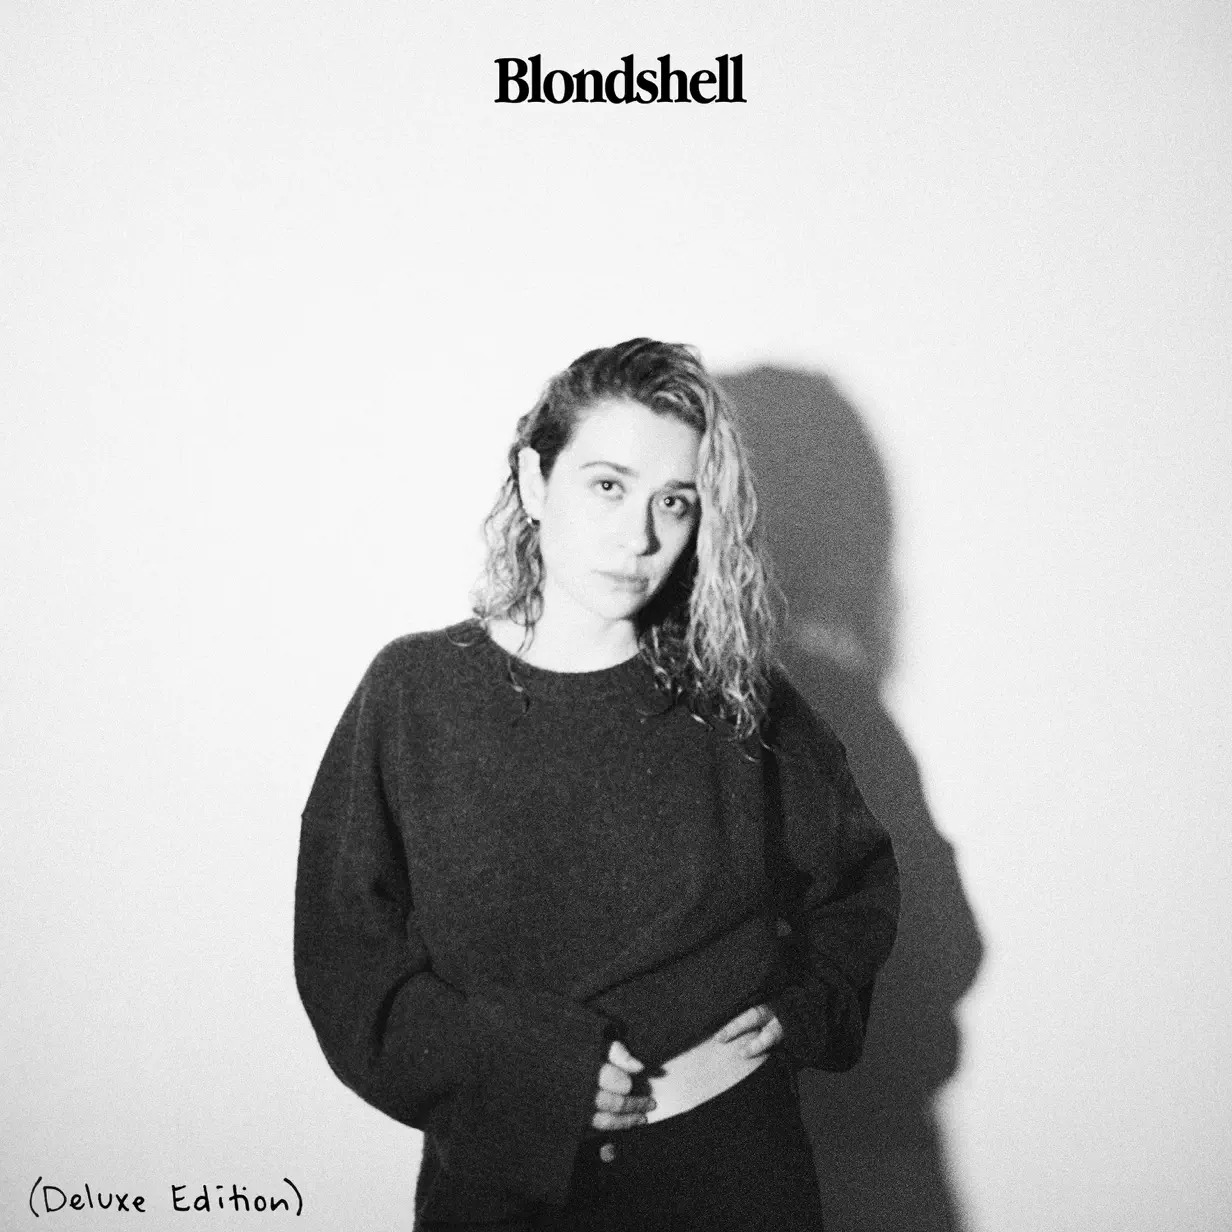 Blondshell‘s “Blondshell” (Deluxe Edition) Album Download Leak MP3 ZIP Files